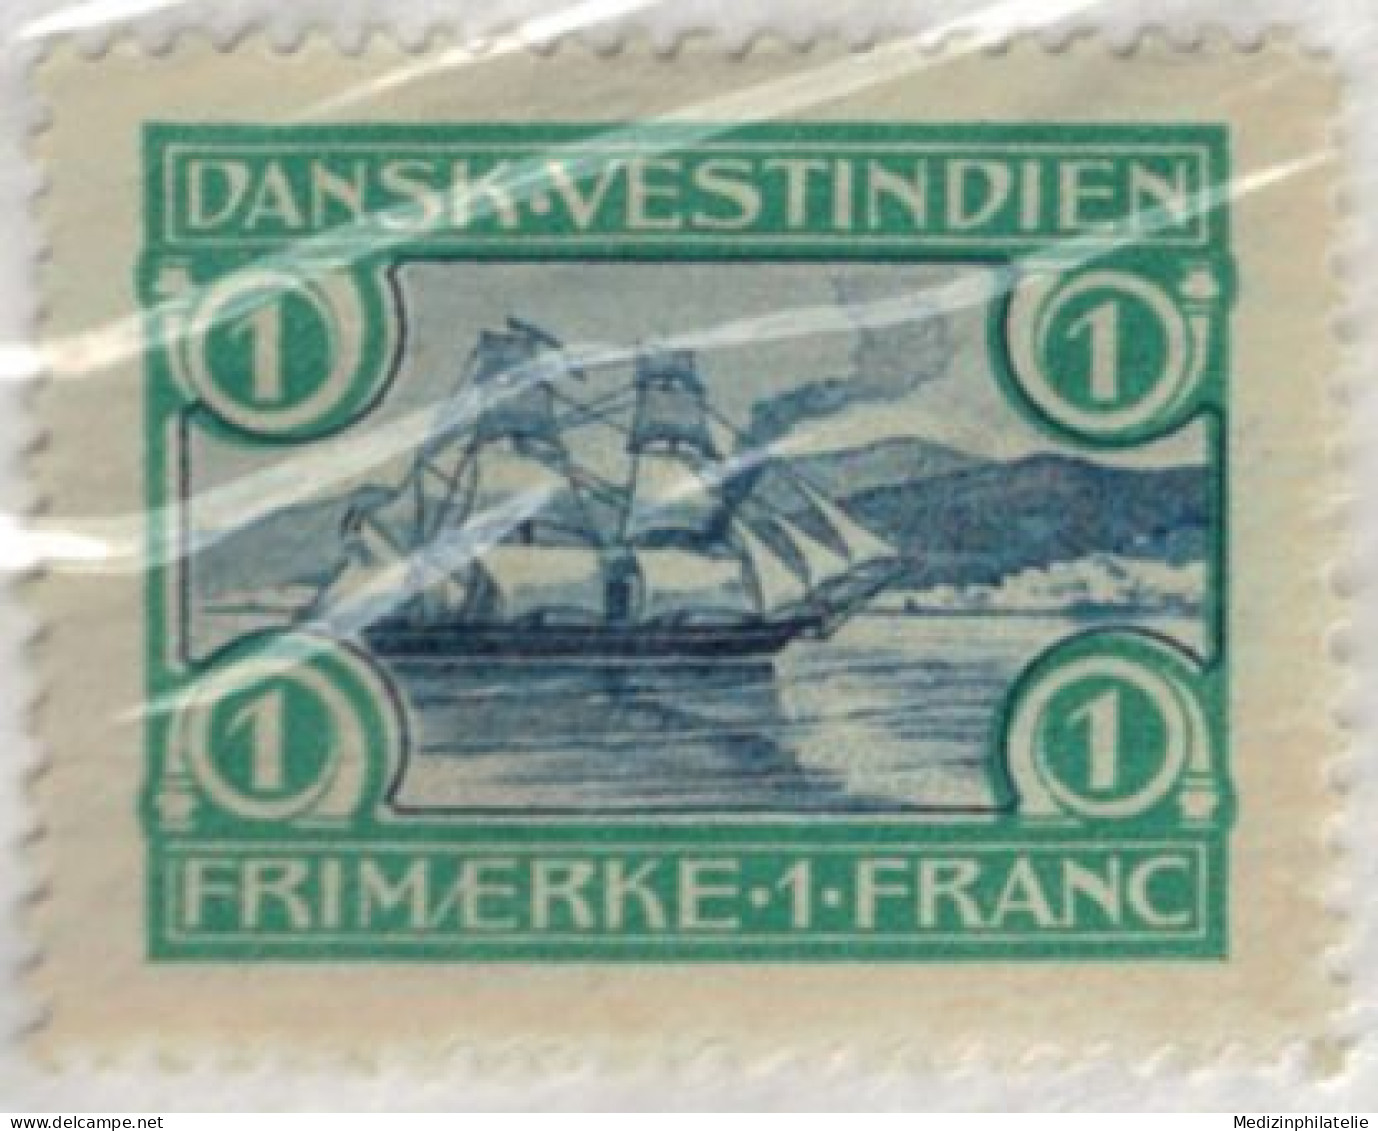 Dänemark Westindien Nr. 35-37 1905 - Denmark (West Indies)